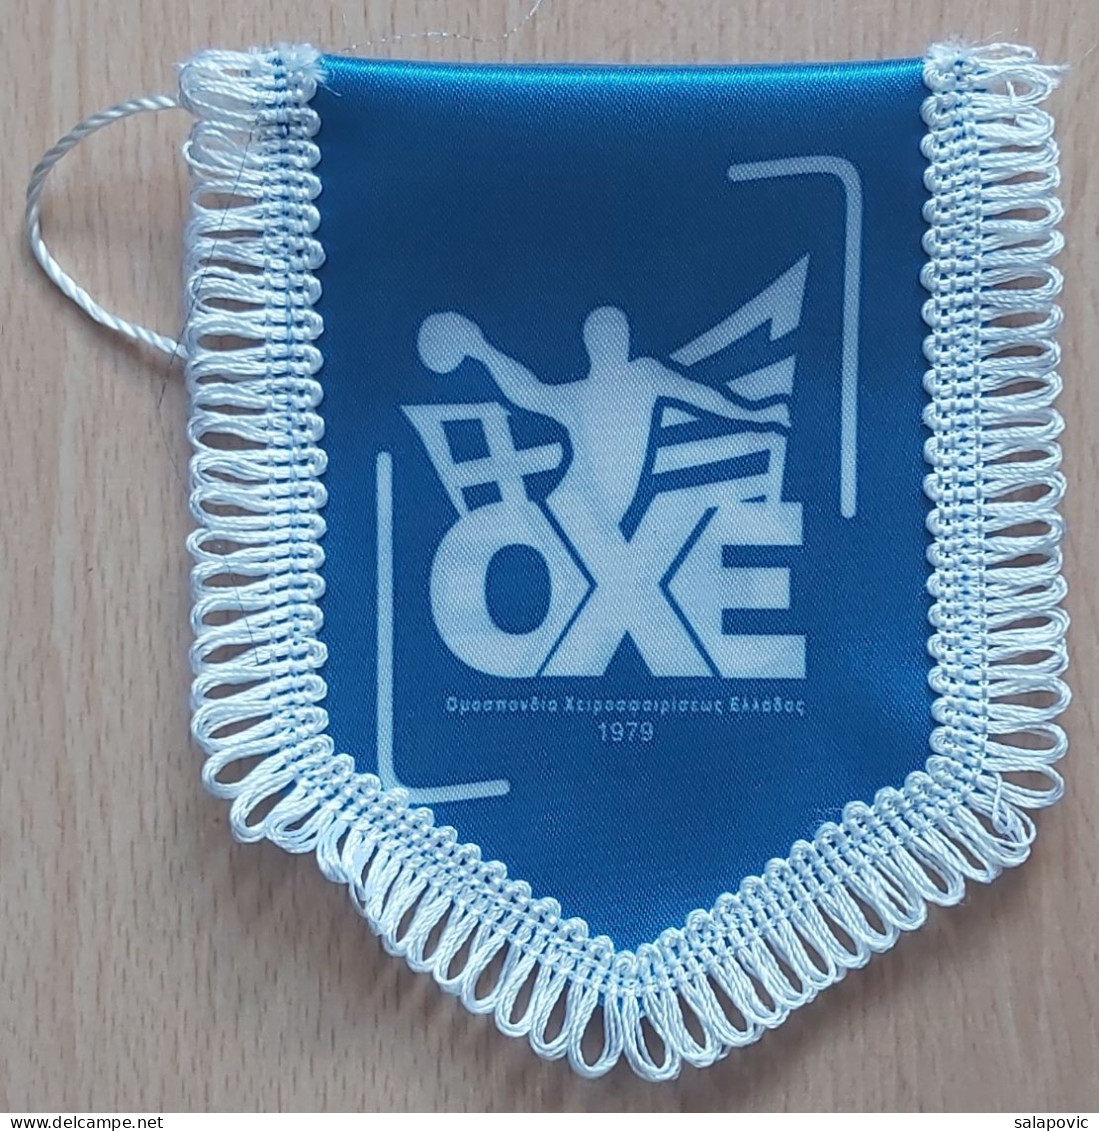 OXE Hellenic Greece Greek Handball Association Federation Union PENNANT, SPORTS FLAG ZS 2/18 - Handball